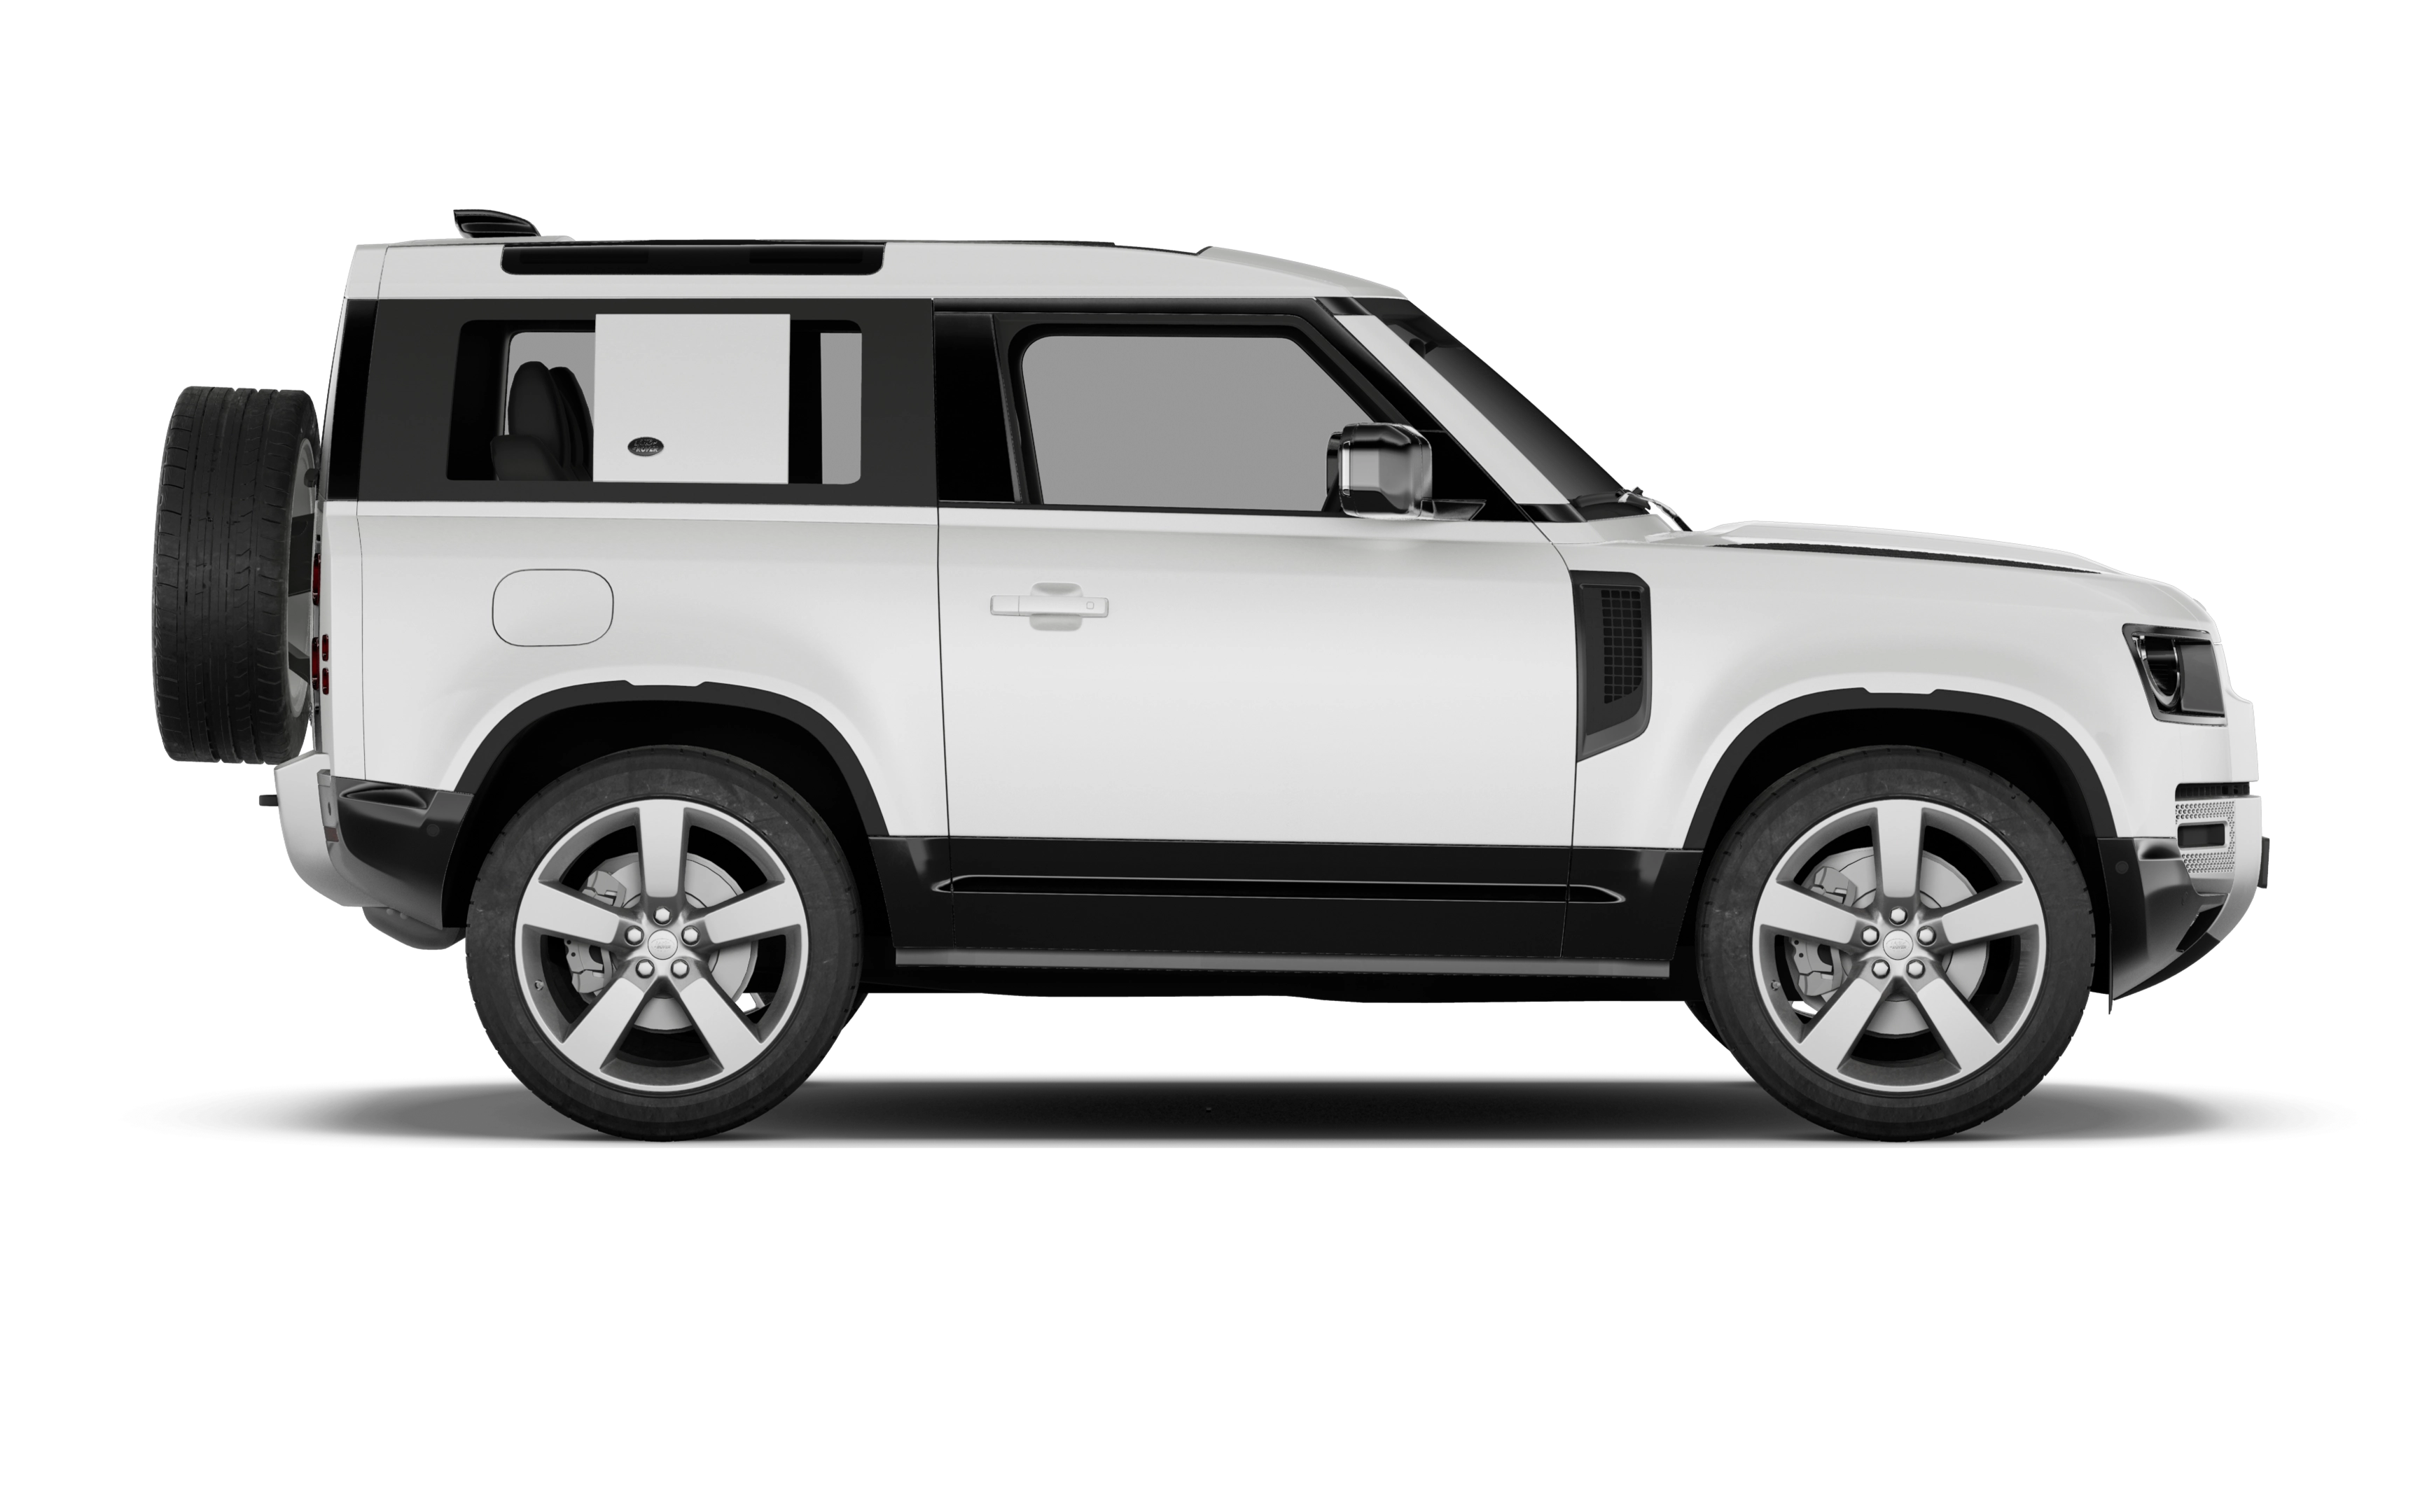 Land rover defender estate 3.0 d250 x-dynamic hse 110 5 doors auto [7 seat]